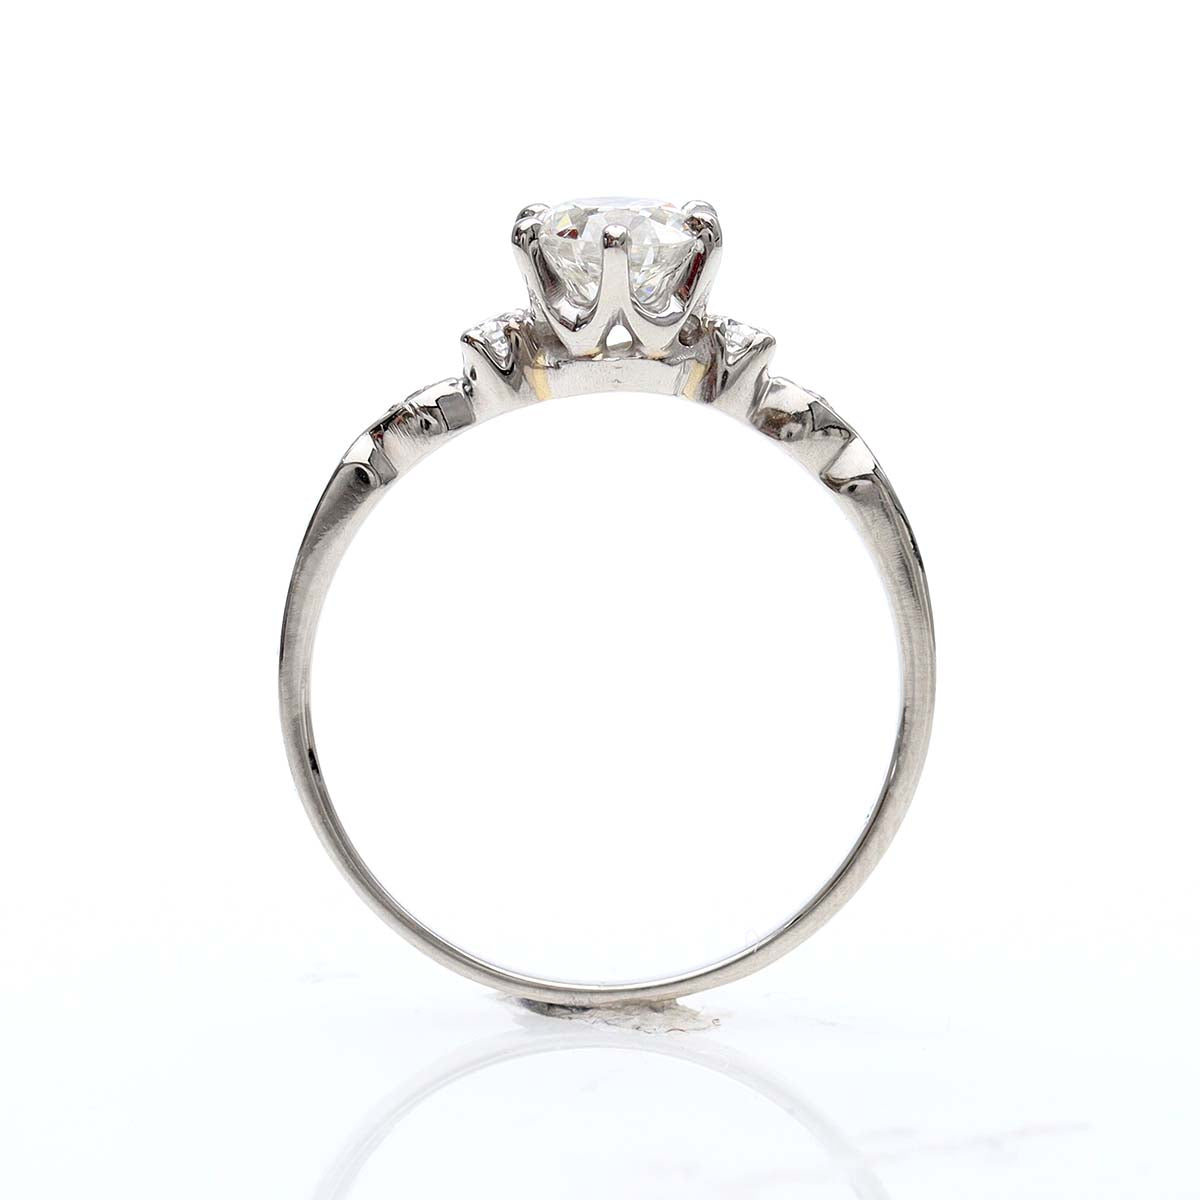 The Cordelia Replica Edwardian Engagement Ring #3510-4